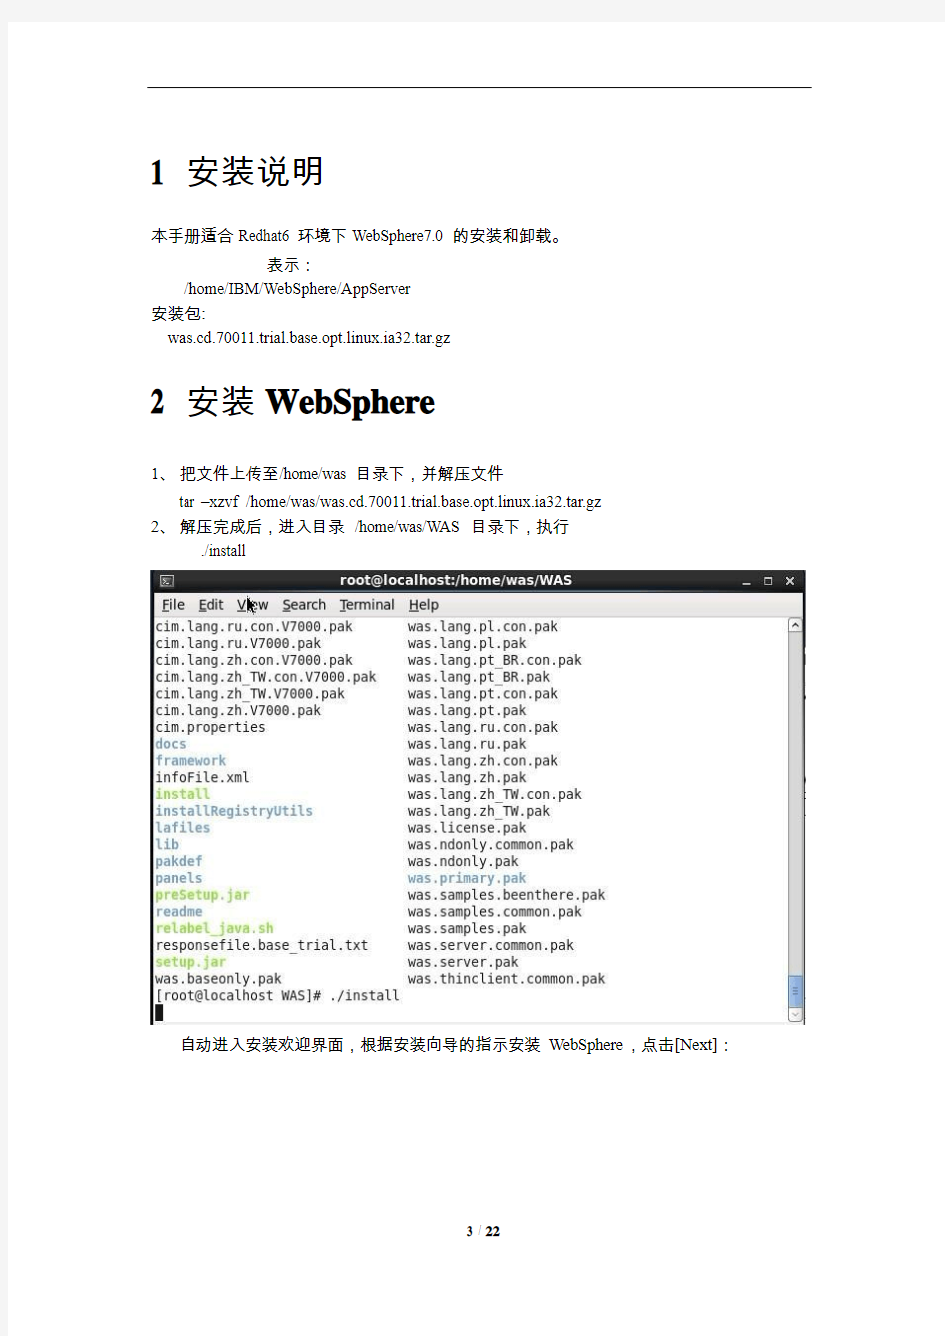 WebSphere7安装手册